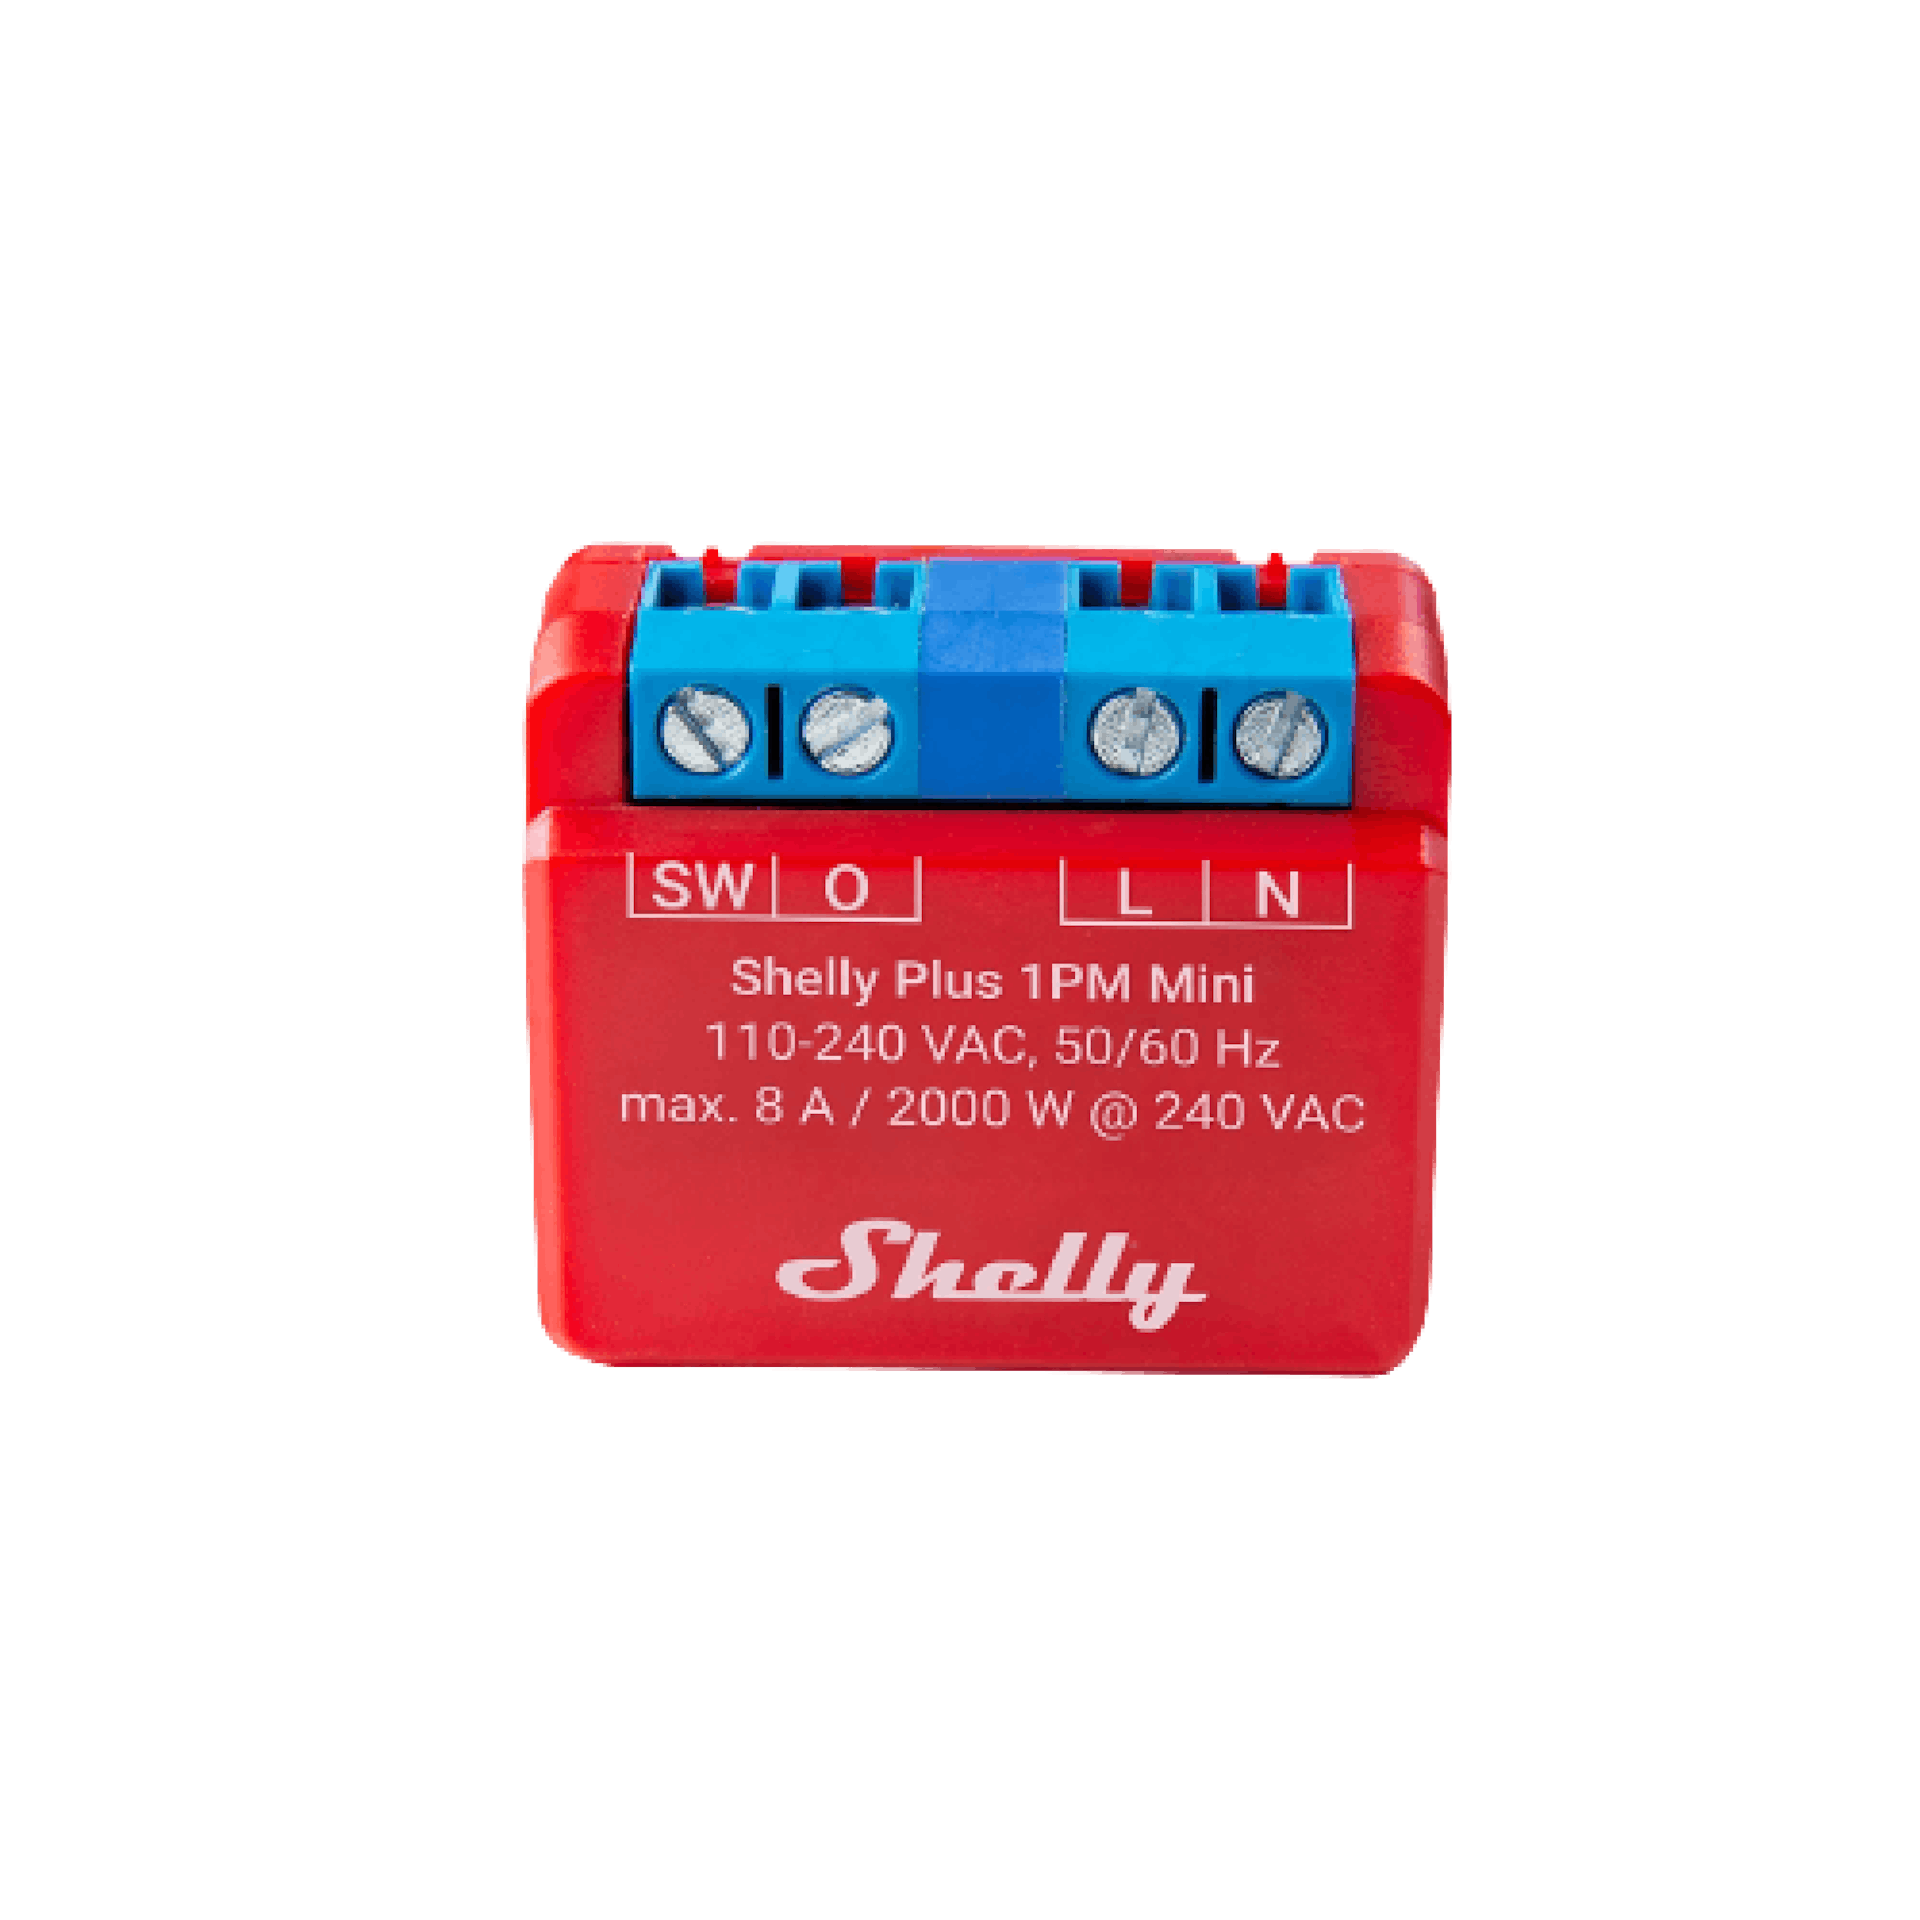 Shelly Plus 1 PM mini - Details - Image